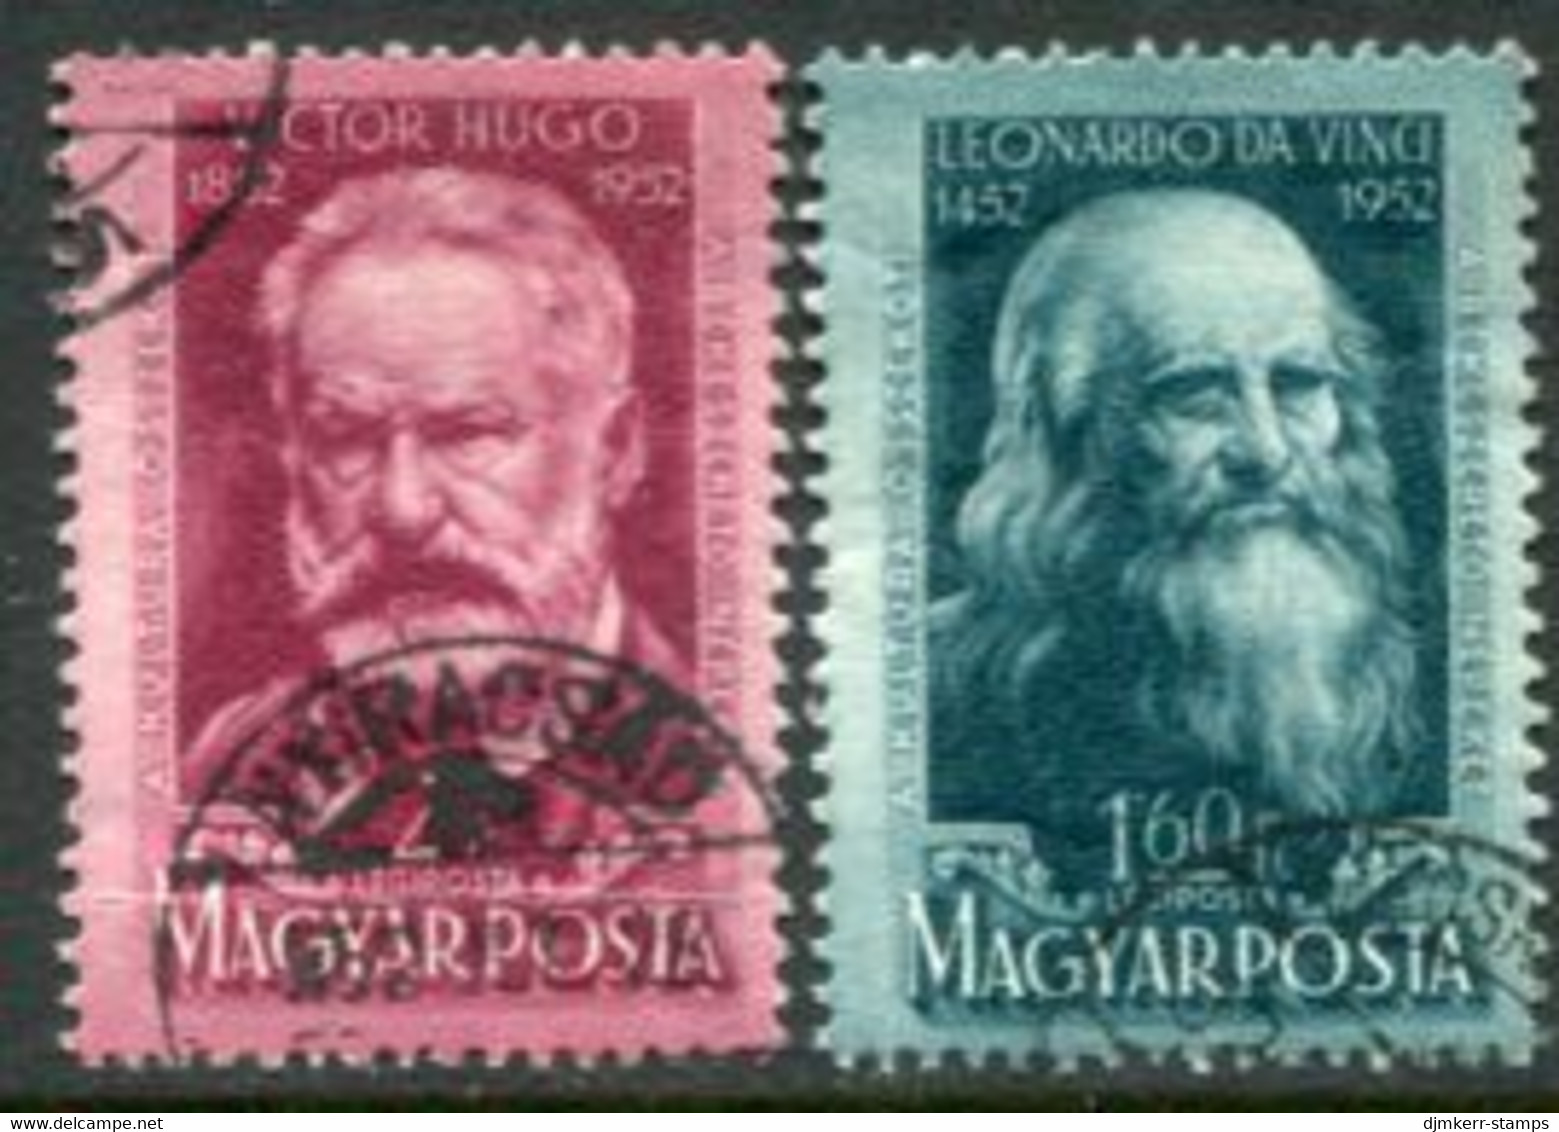 HUNGARY 1952 Leonardo And Hugo Anniversaries Used  Michel 1253-54 - Used Stamps